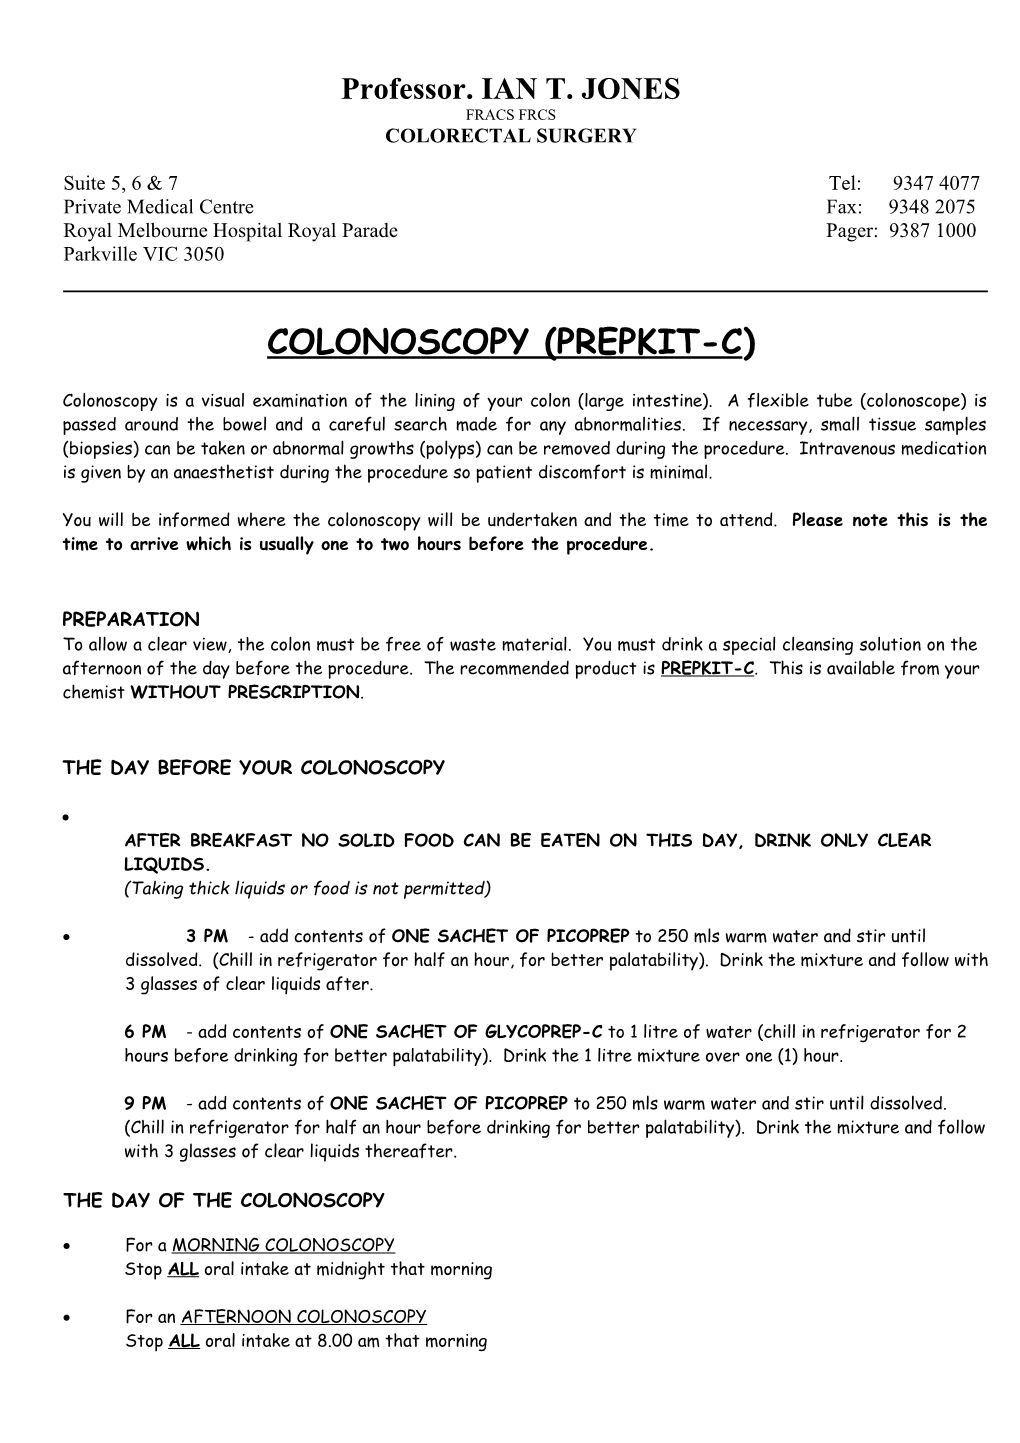 Information Regarding Colonoscopy